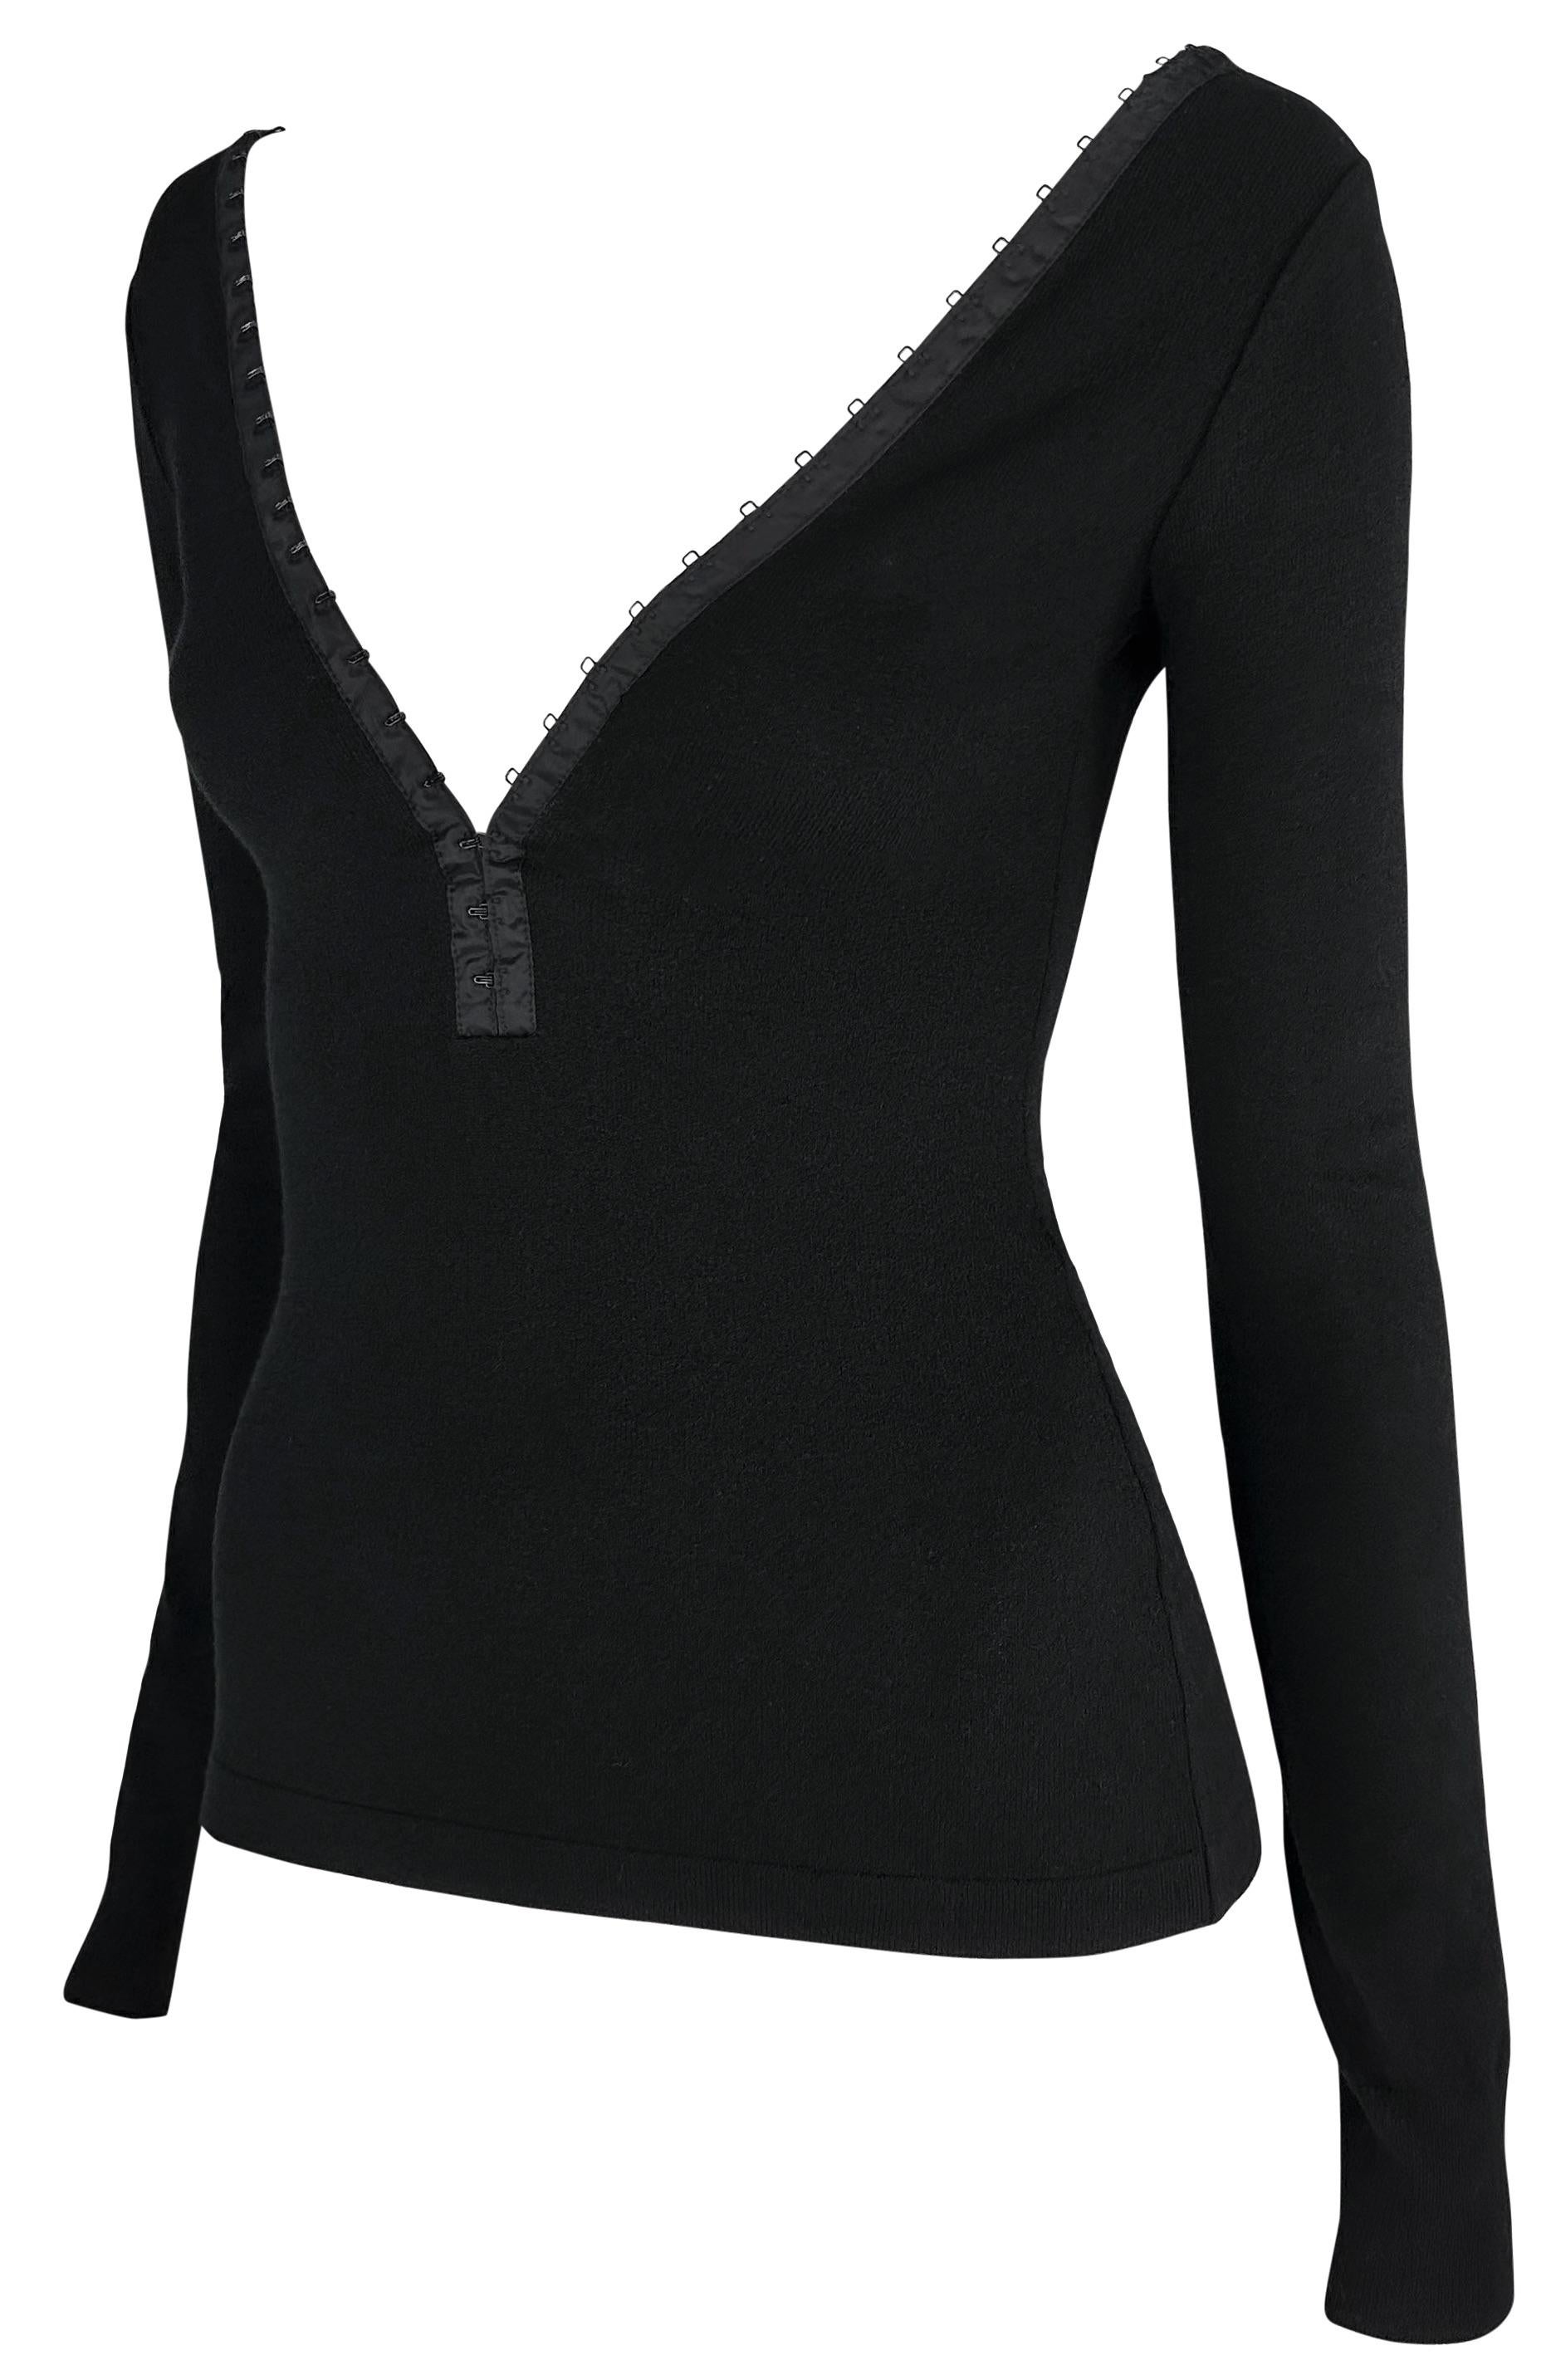 Women's S/S 2003 Dolce & Gabbana Hook & Eye Plunging Black Bodycon Knit Long-Sleeve Top For Sale